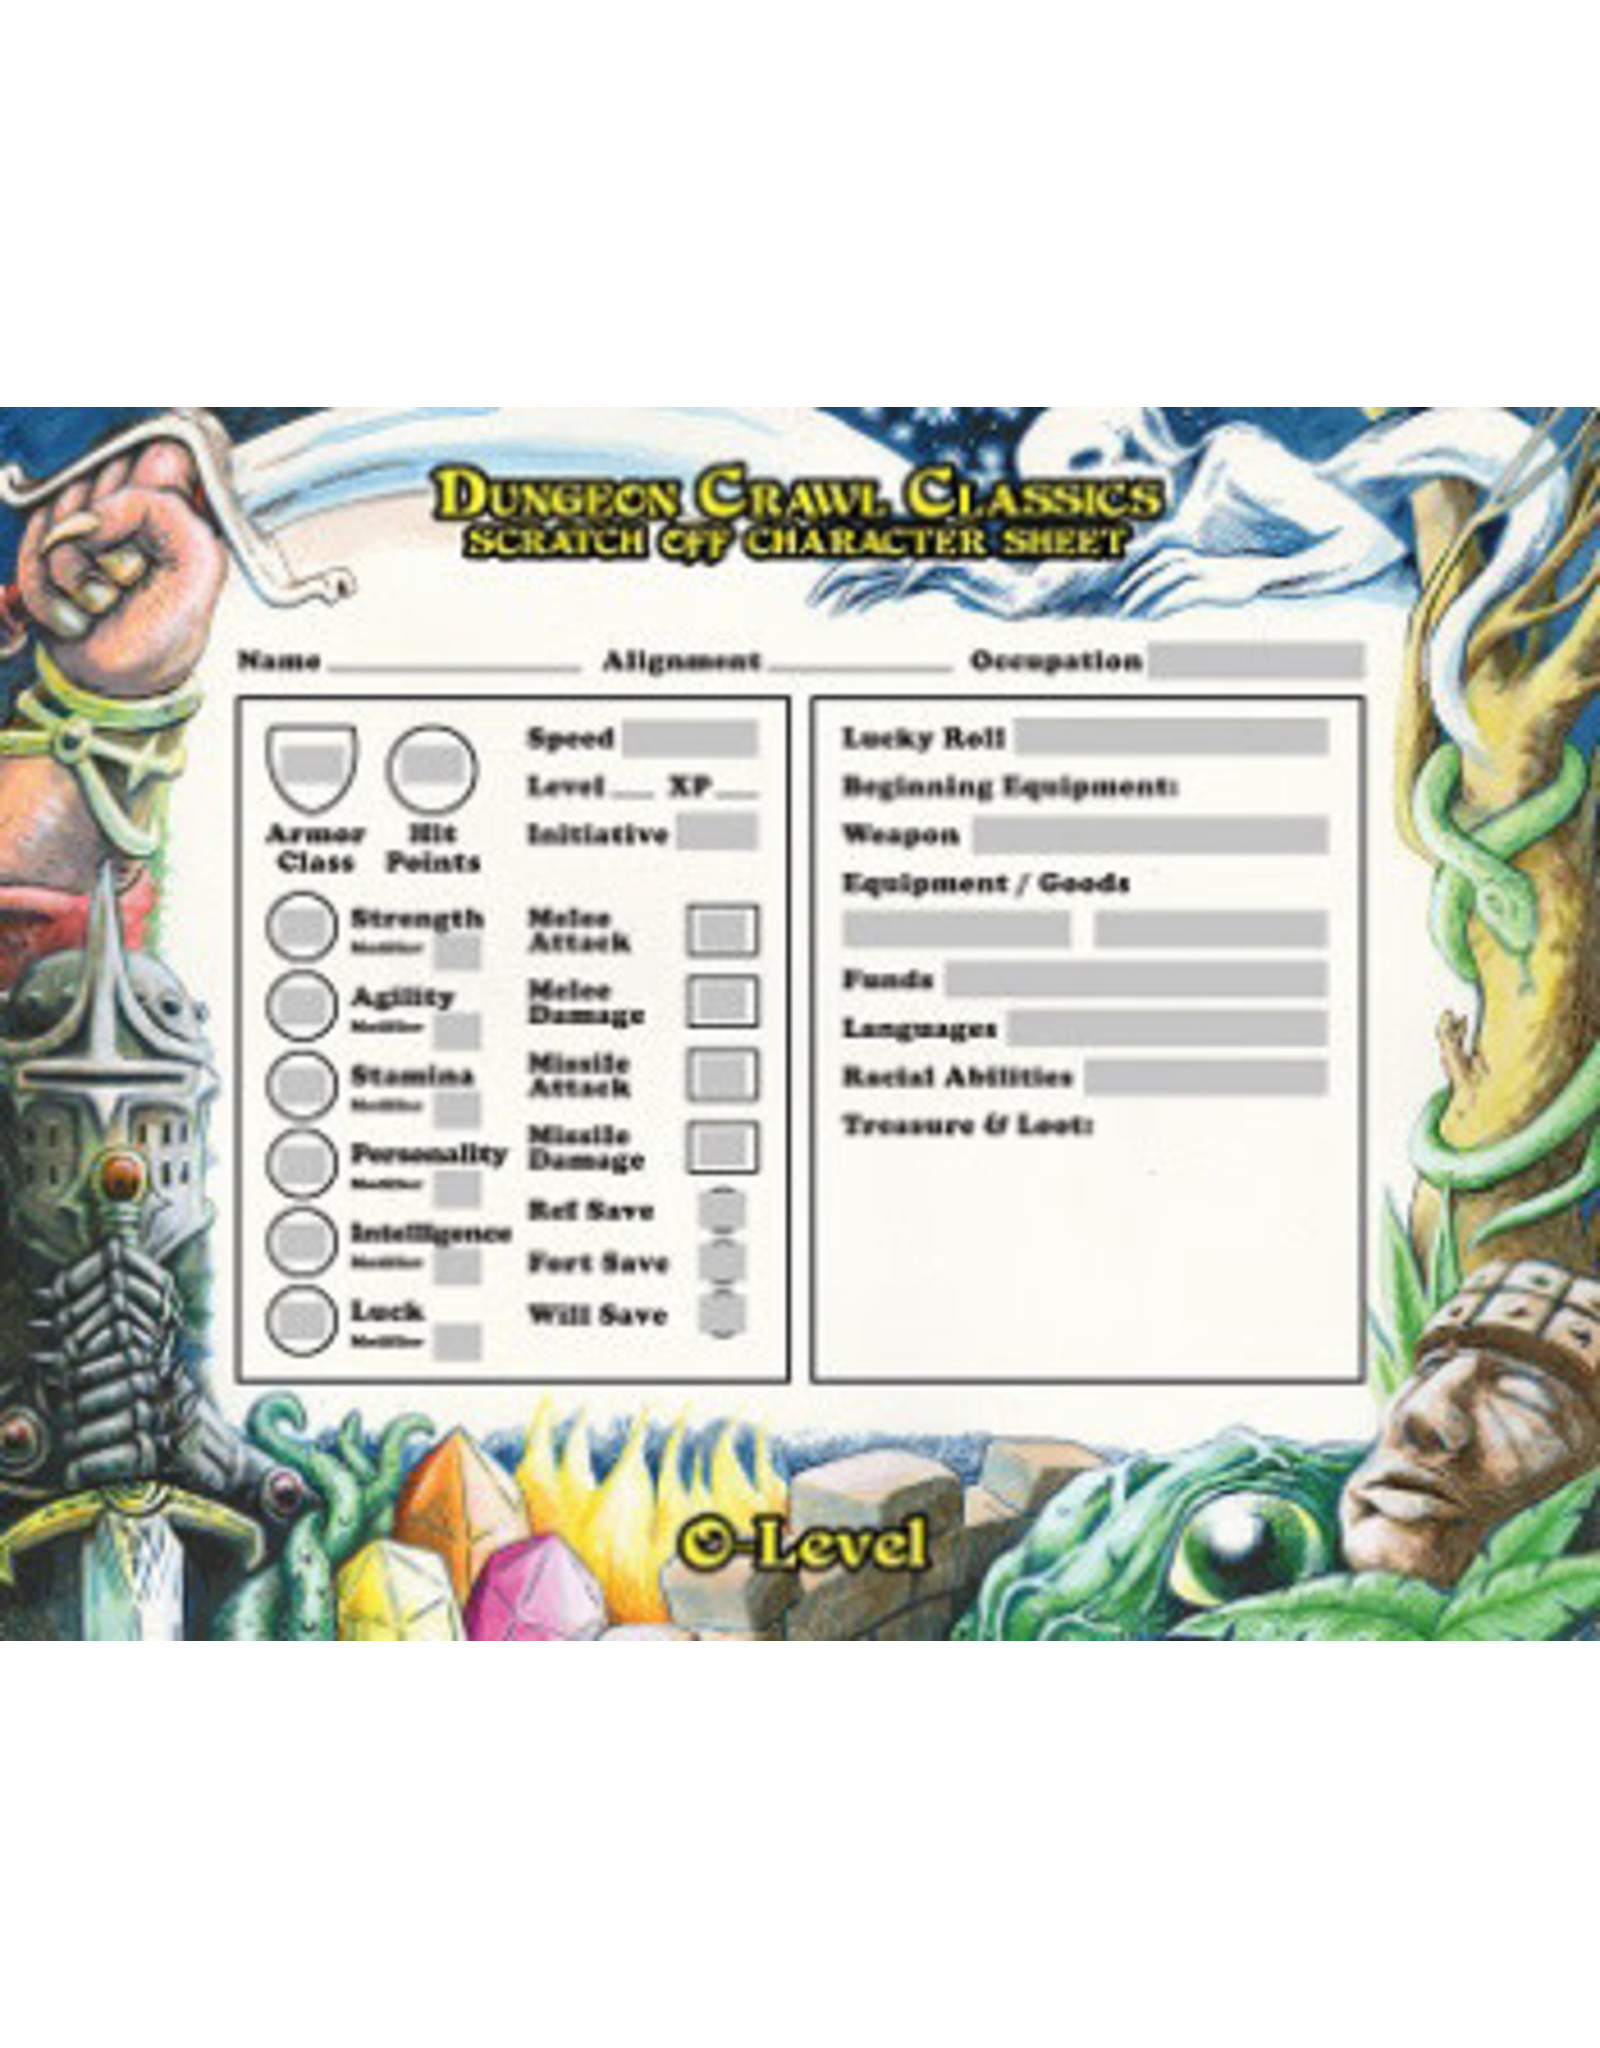 Goodman Games DCC RPG 0-Level Scratch off character sheet